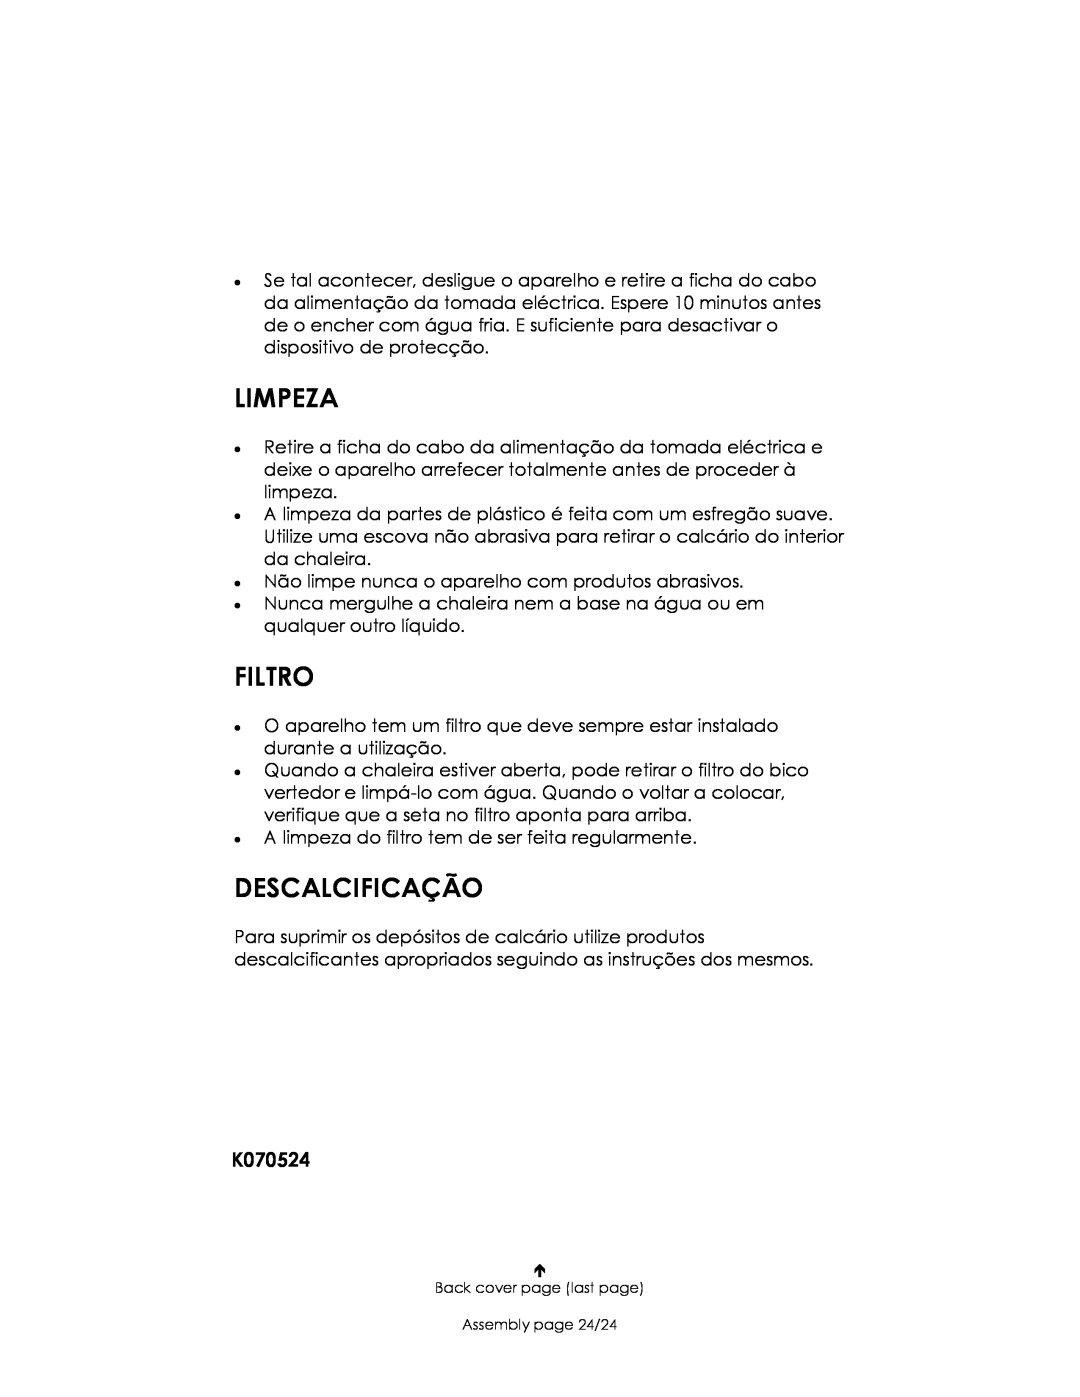 Kalorik USK JK 5 manual Limpeza, Descalcificação, Filtro, K070524 